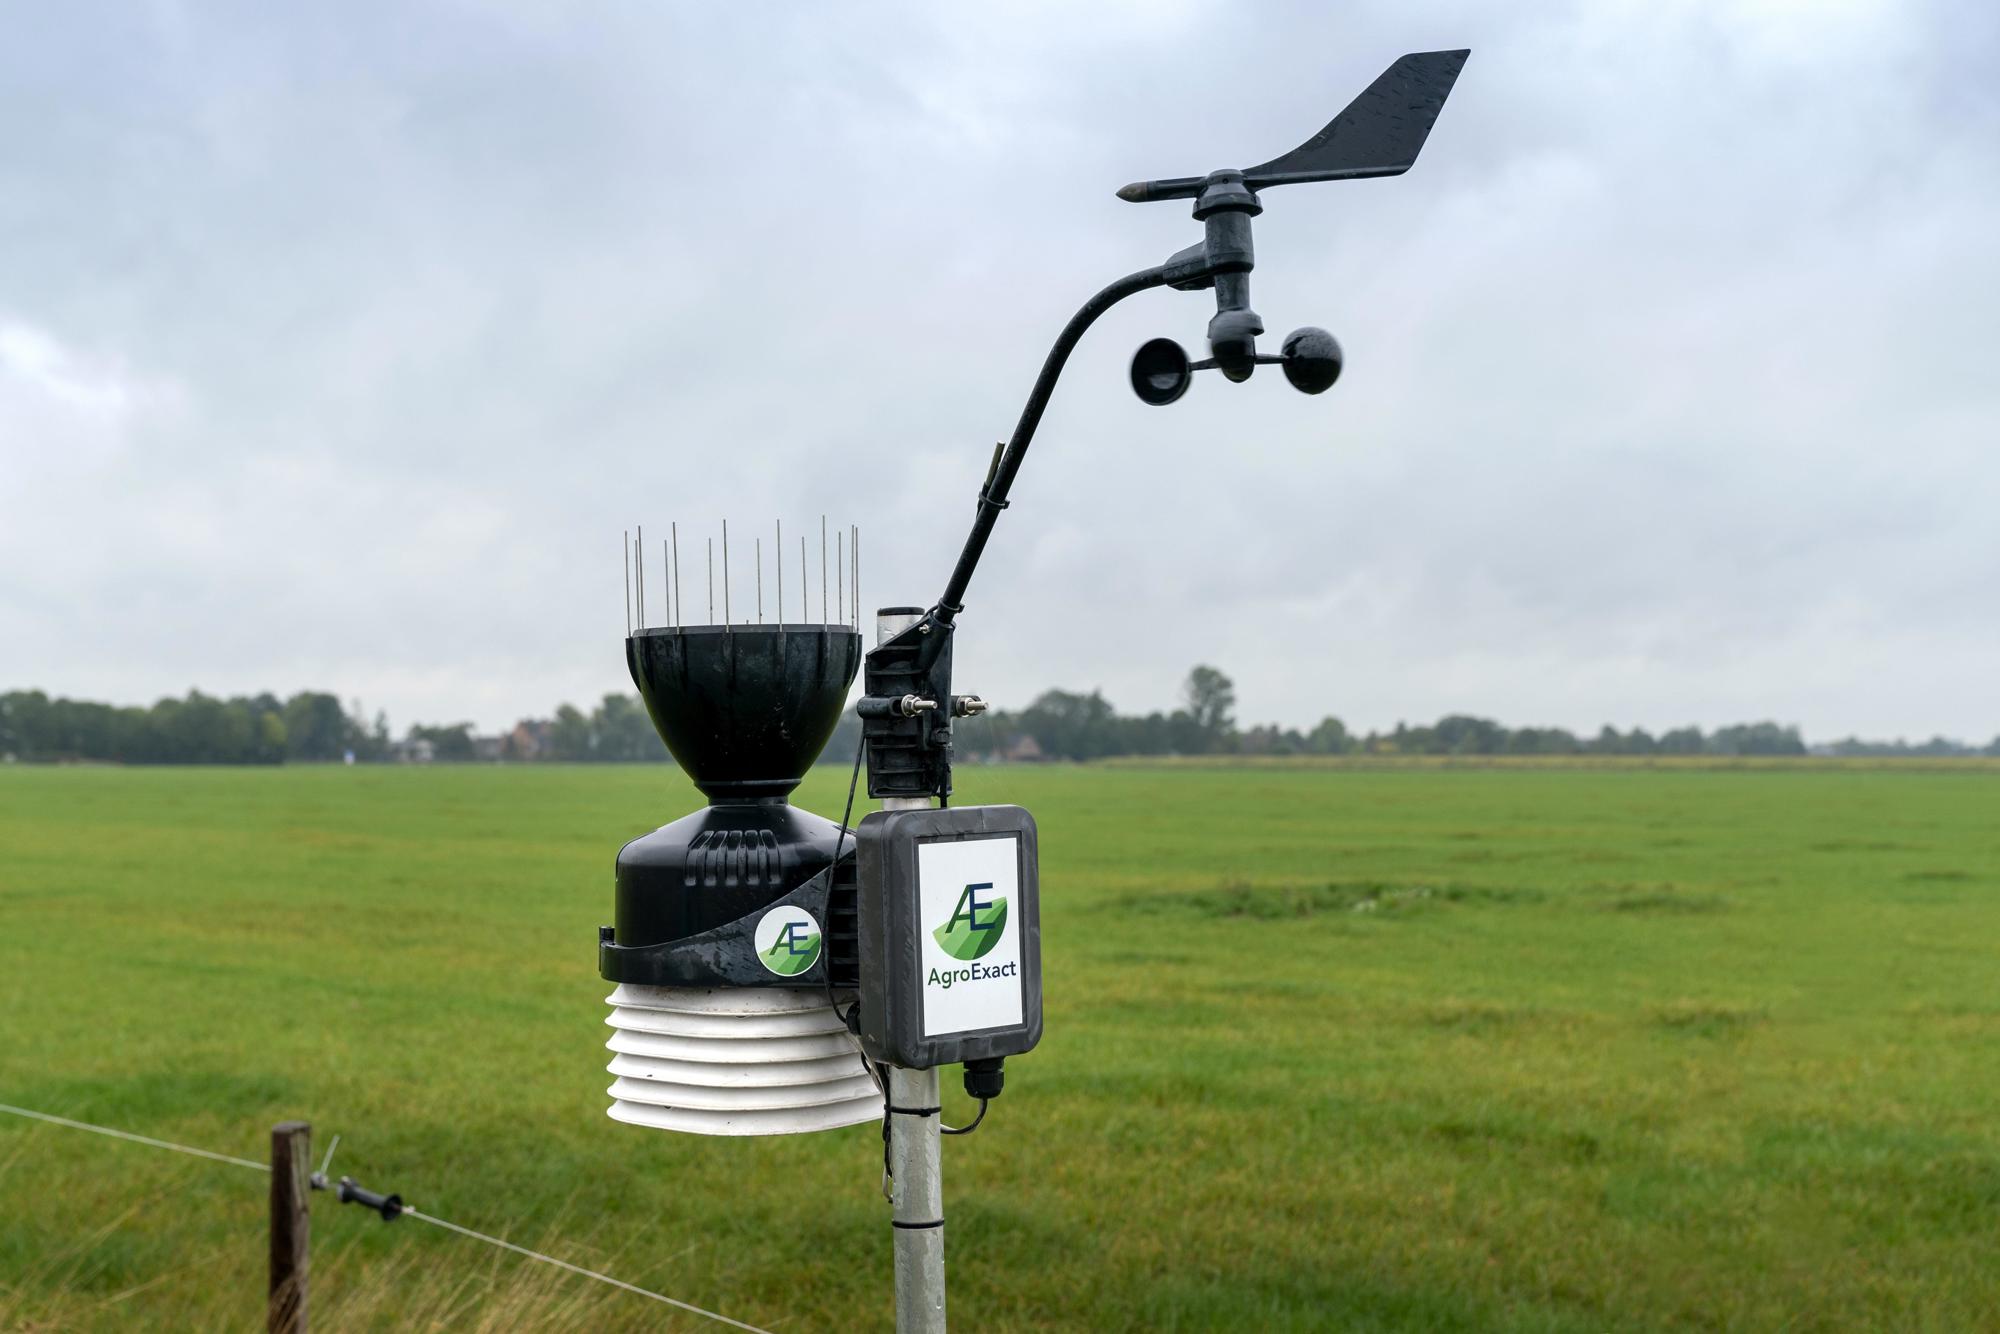 Weather station AgroExact